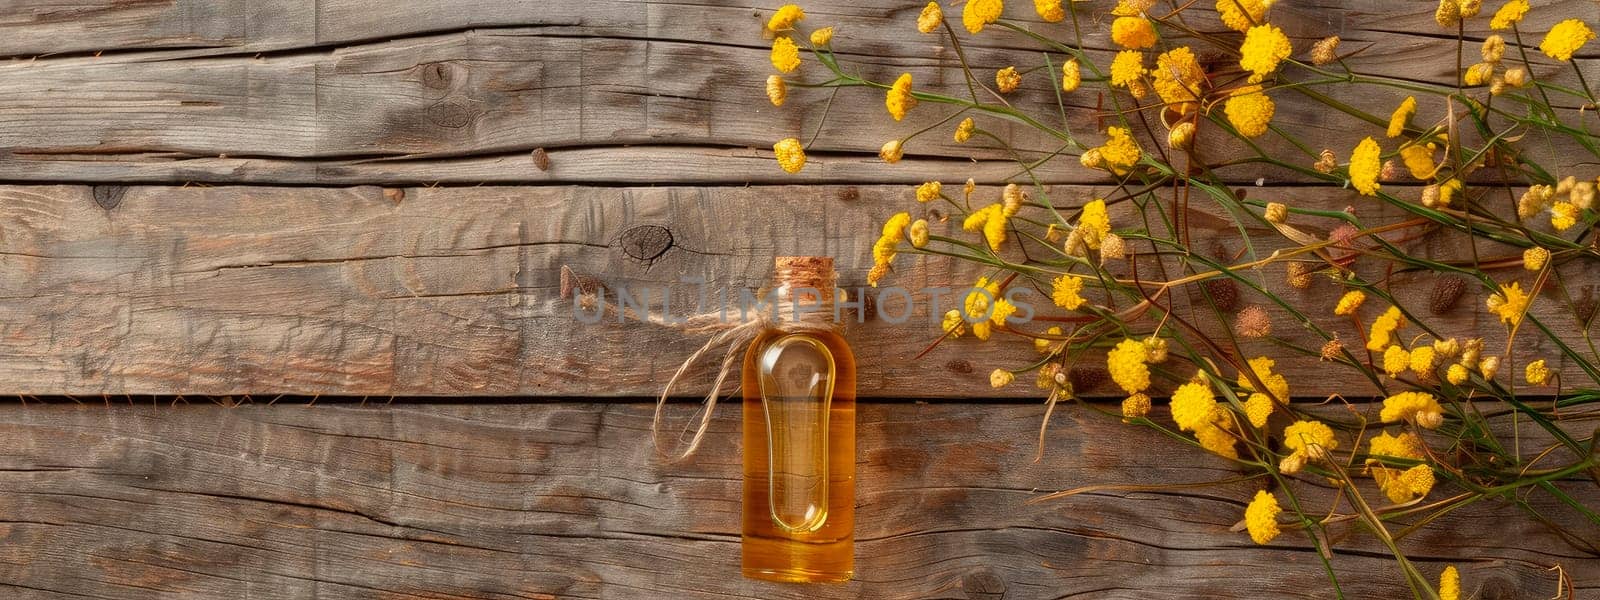 immortelle essential oil in a bottle. Selective focus. by yanadjana